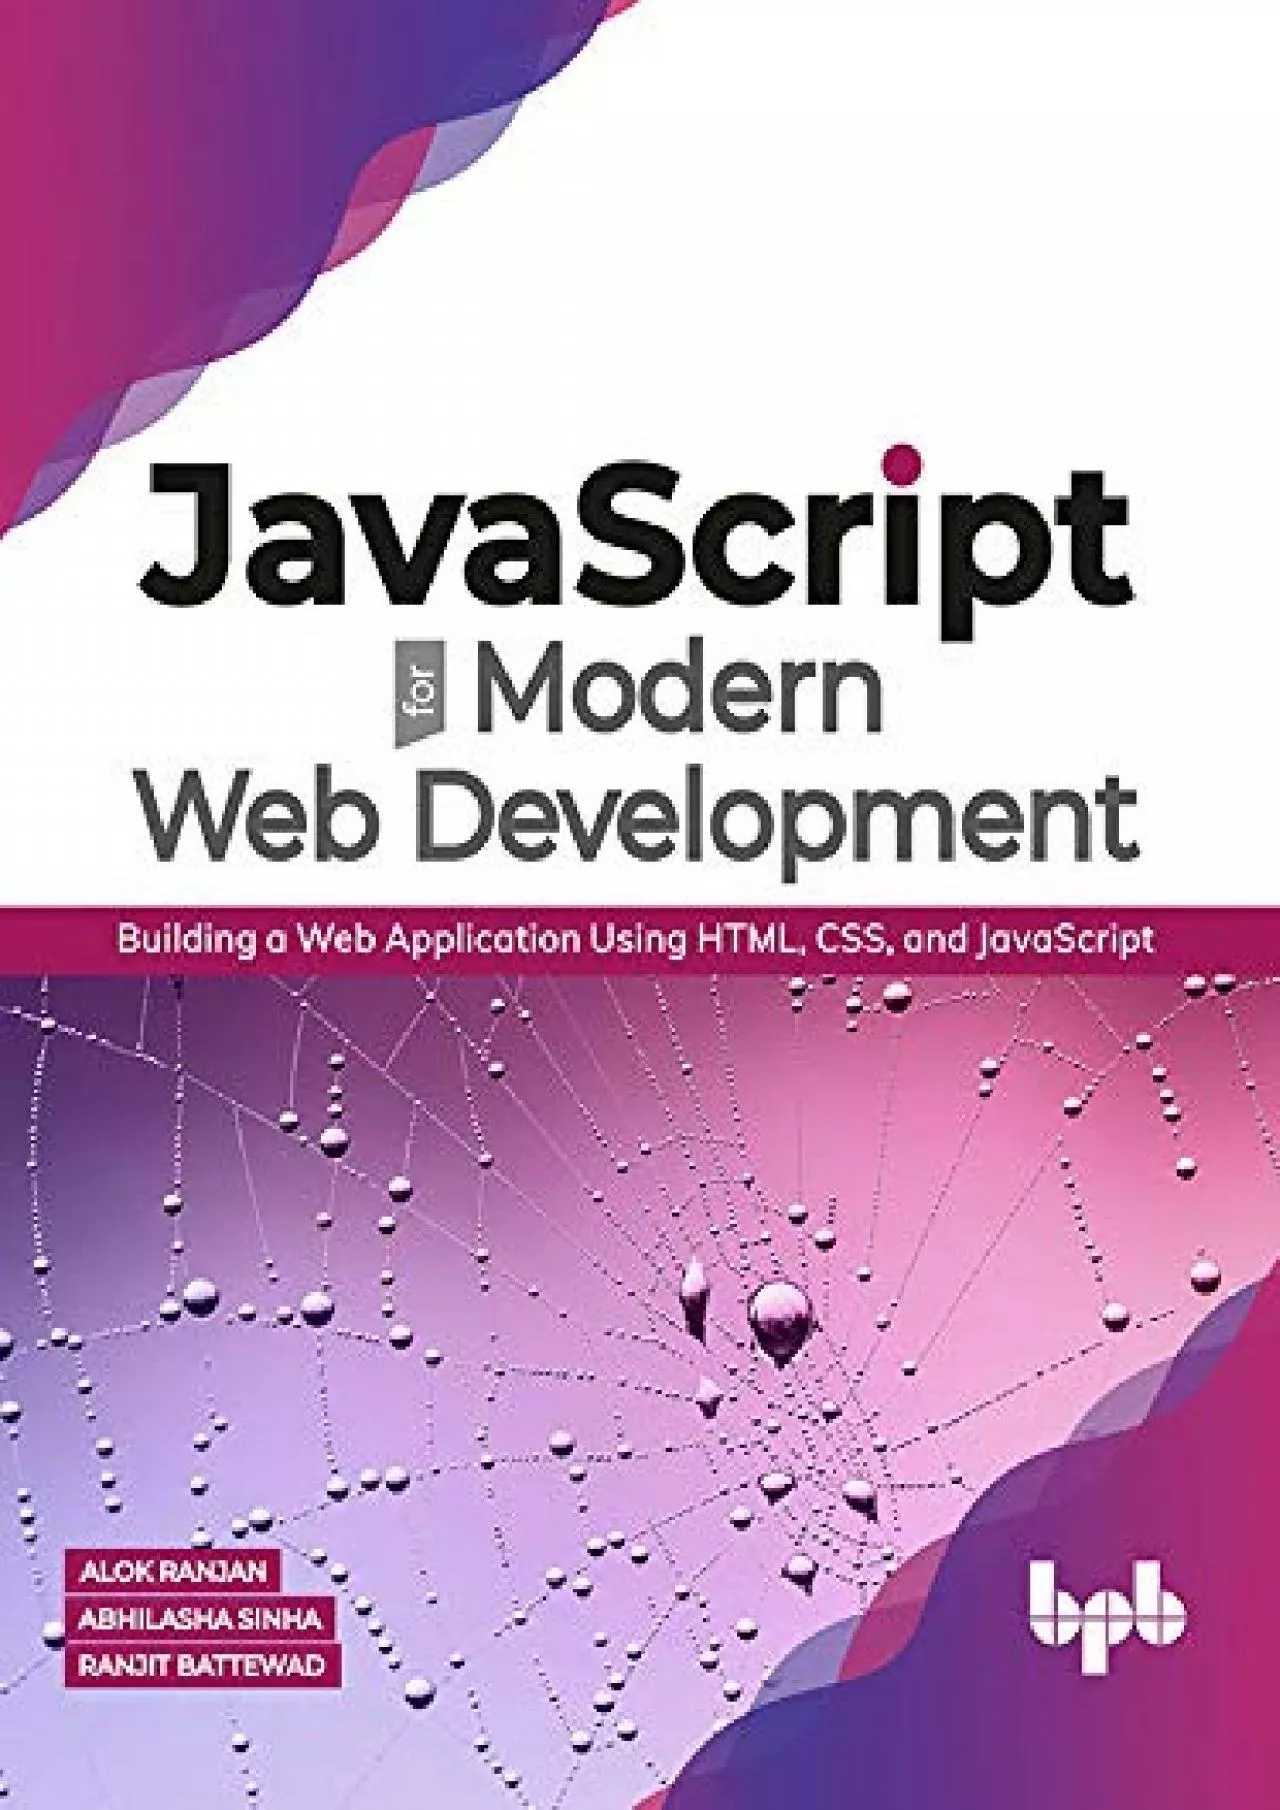 (BOOK)-JavaScript for Modern Web Development From Web Development Basics to Building Real